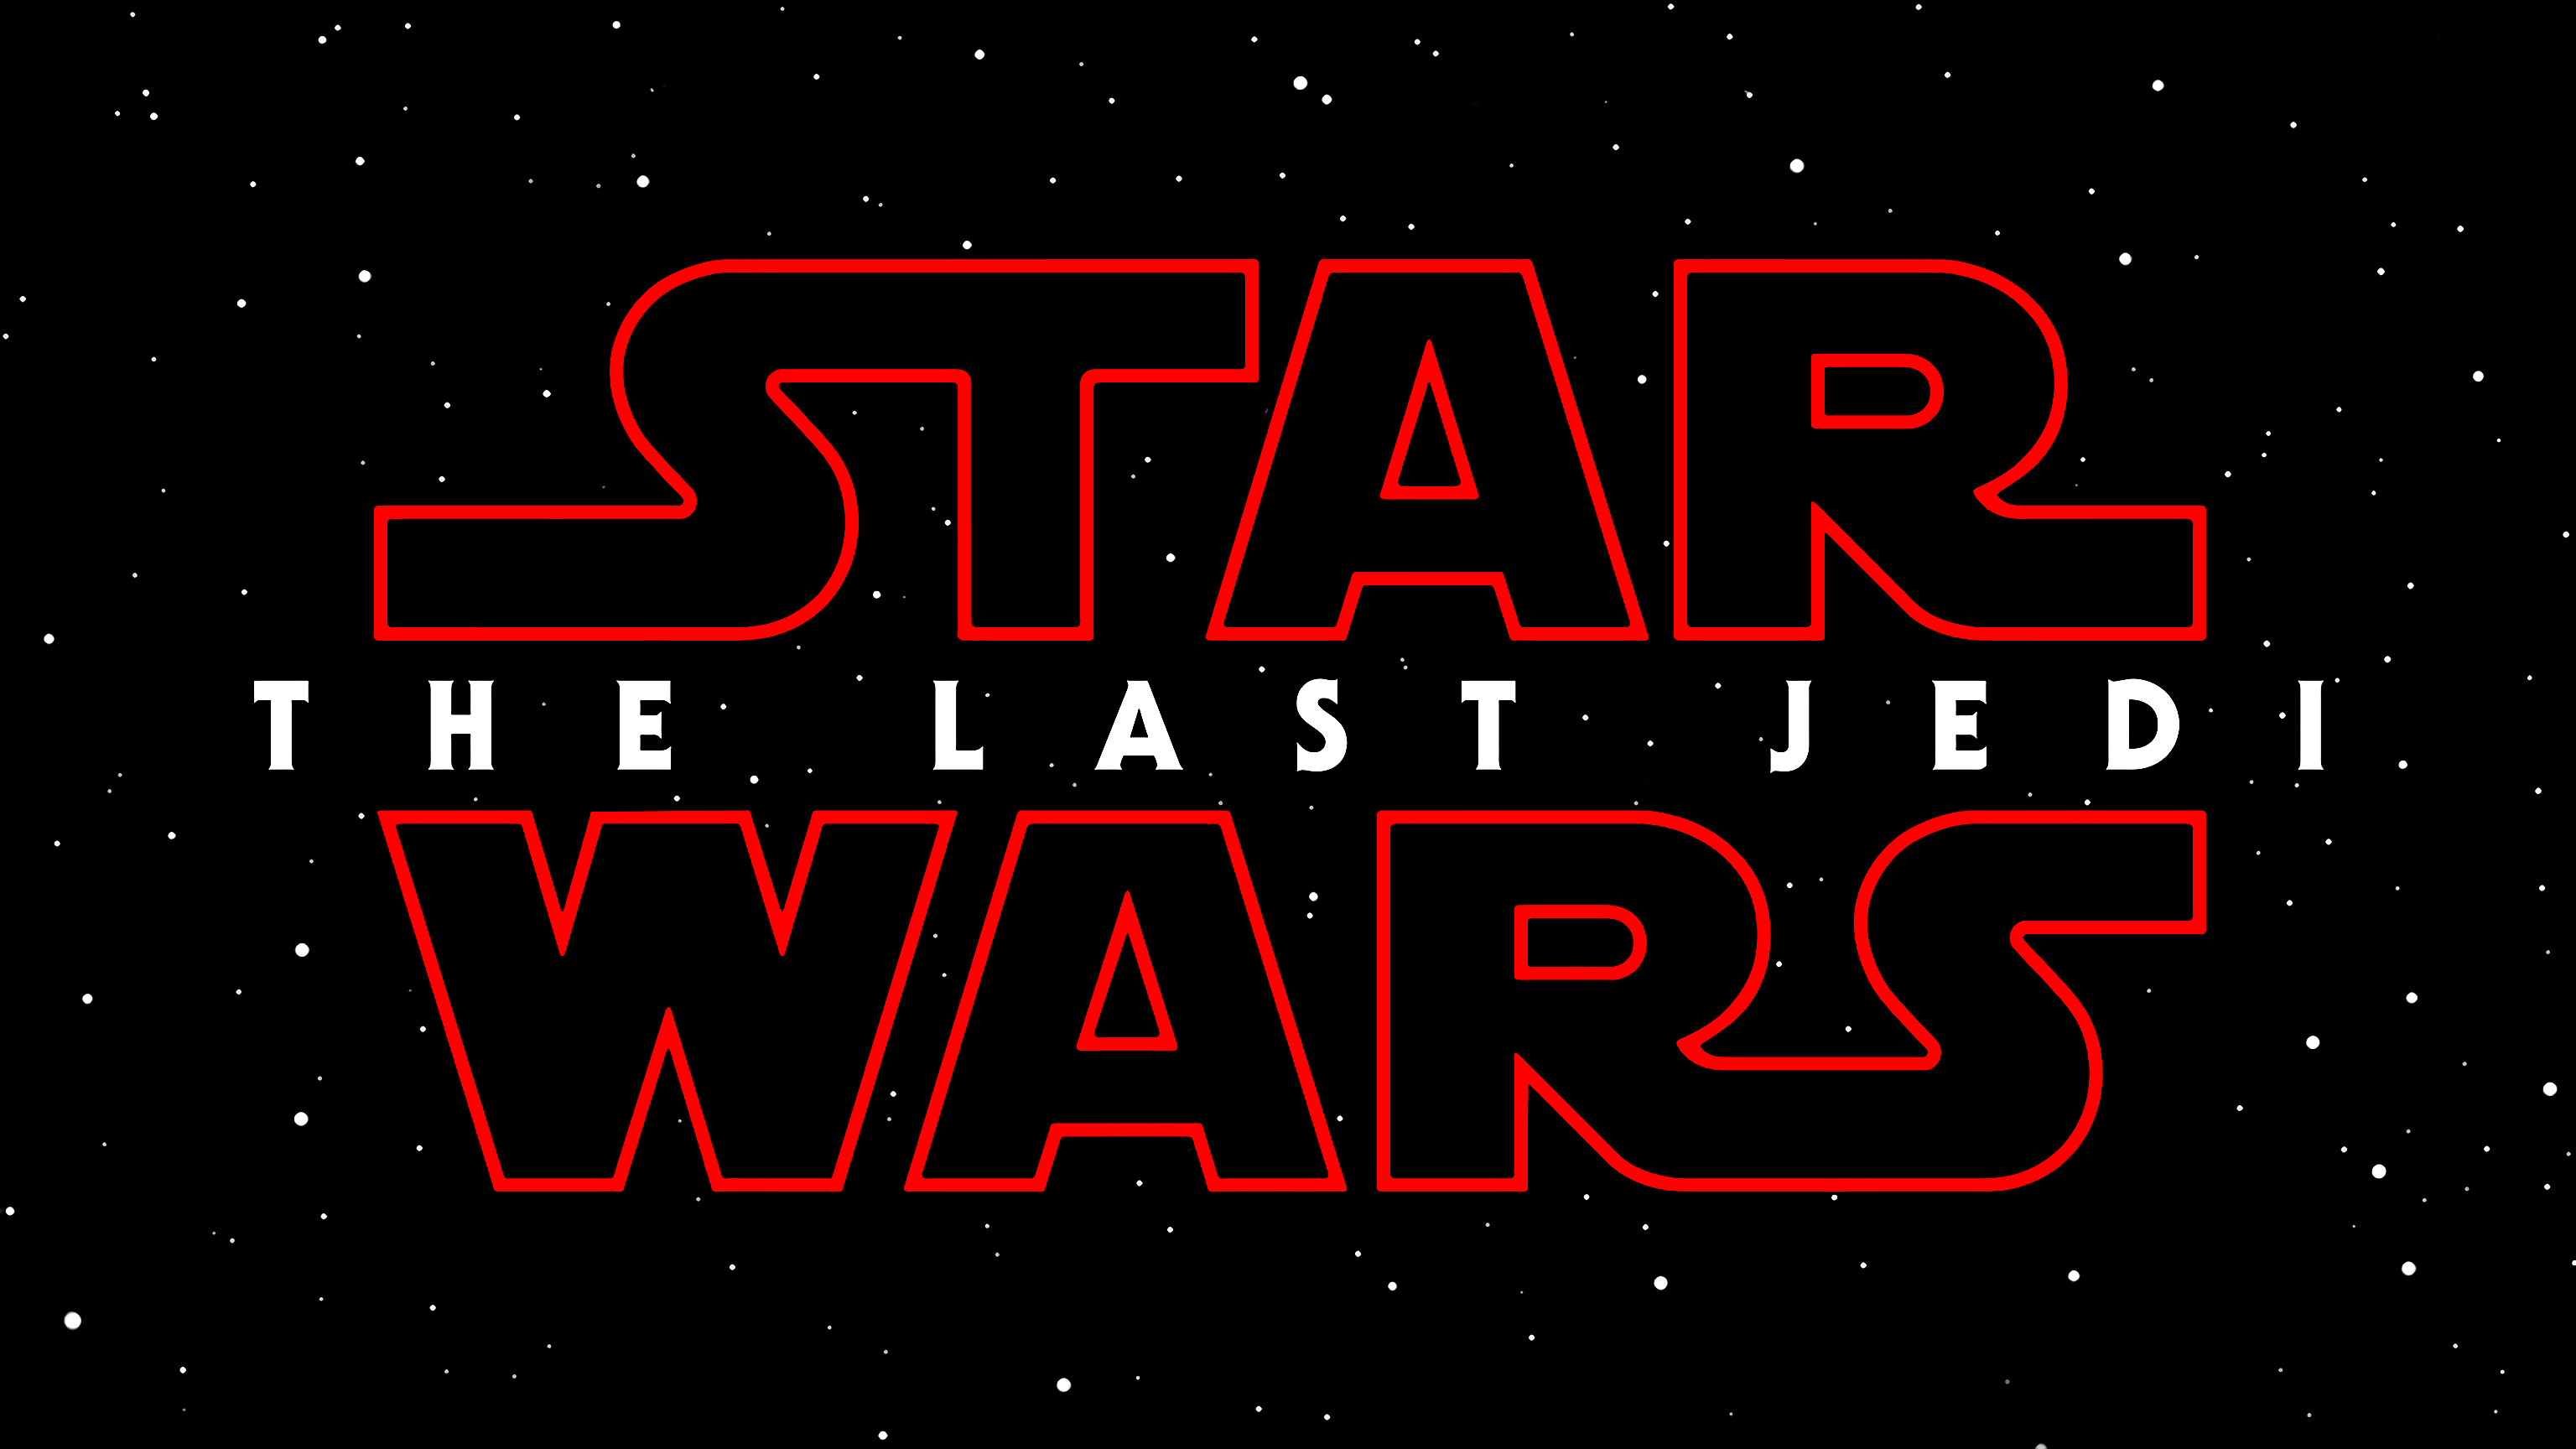 Star Wars Star Wars The Last Jedi Typography Movies 2017 Year 3072x1728